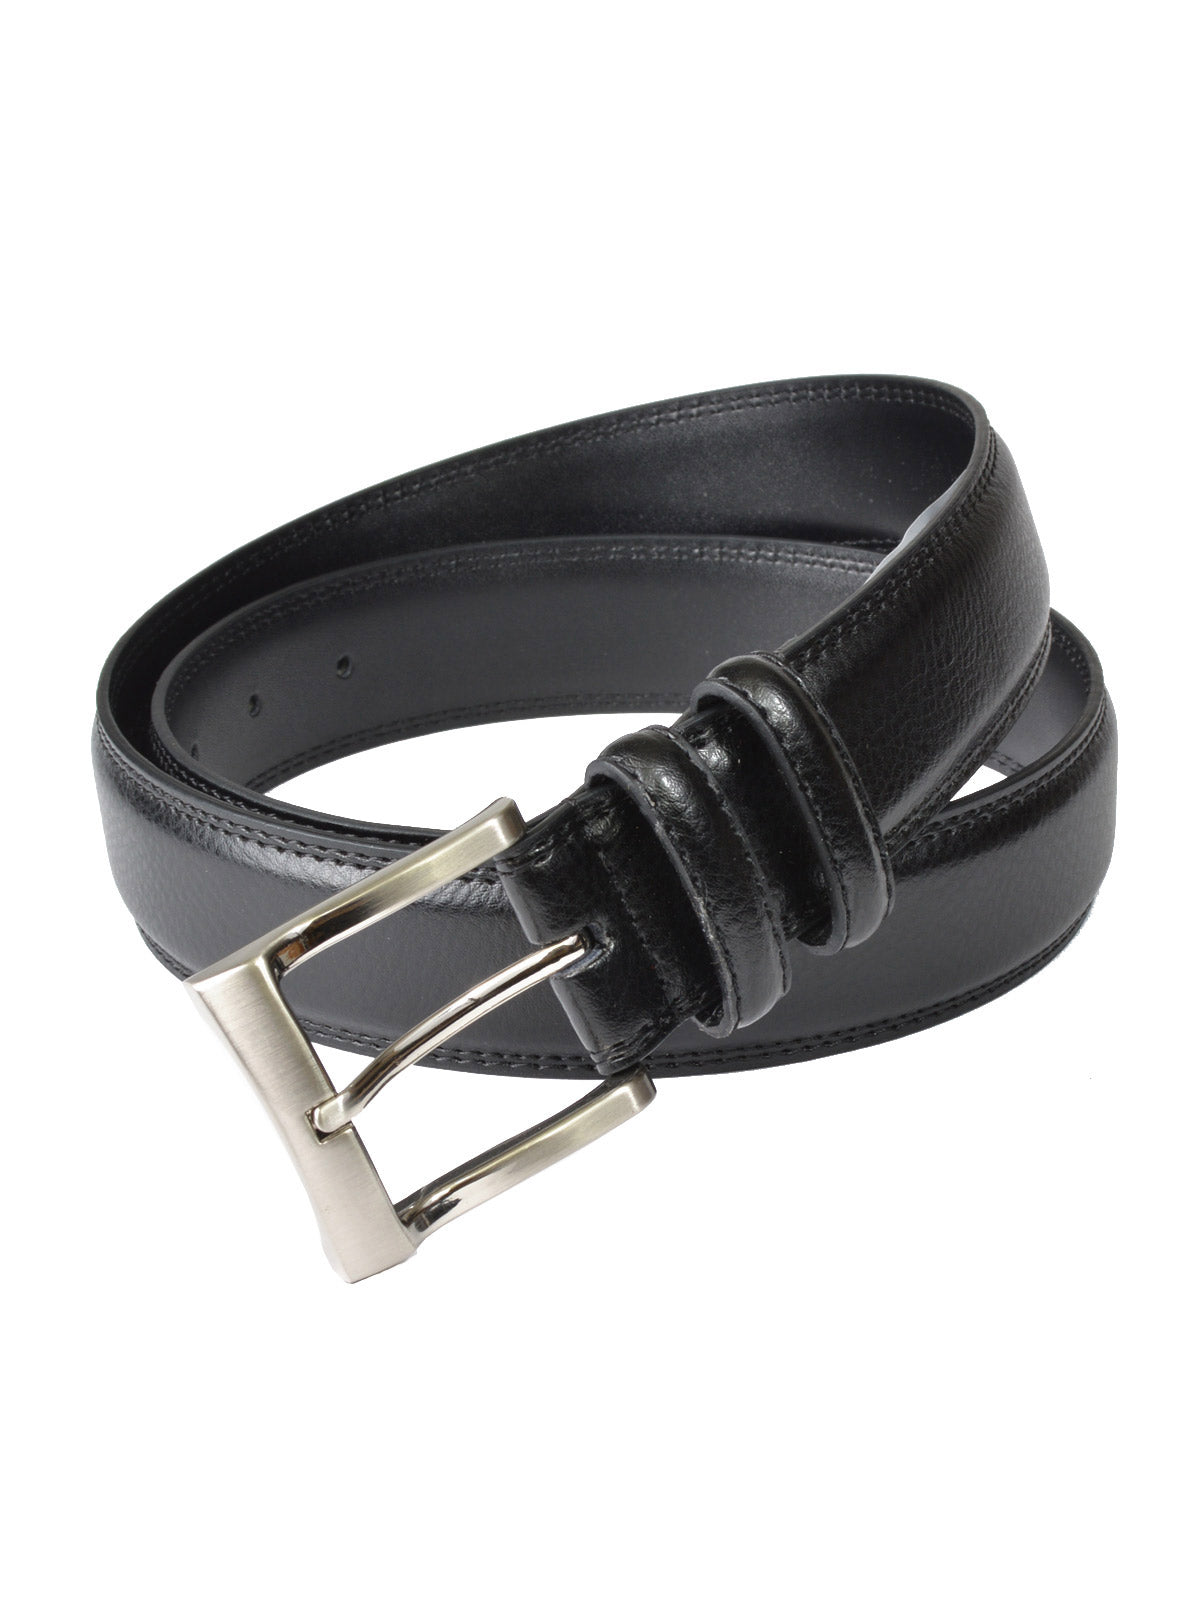 Florsheim Genuine Leather Pebble Grain Dress Belts in Black - Sizes 34 - 44